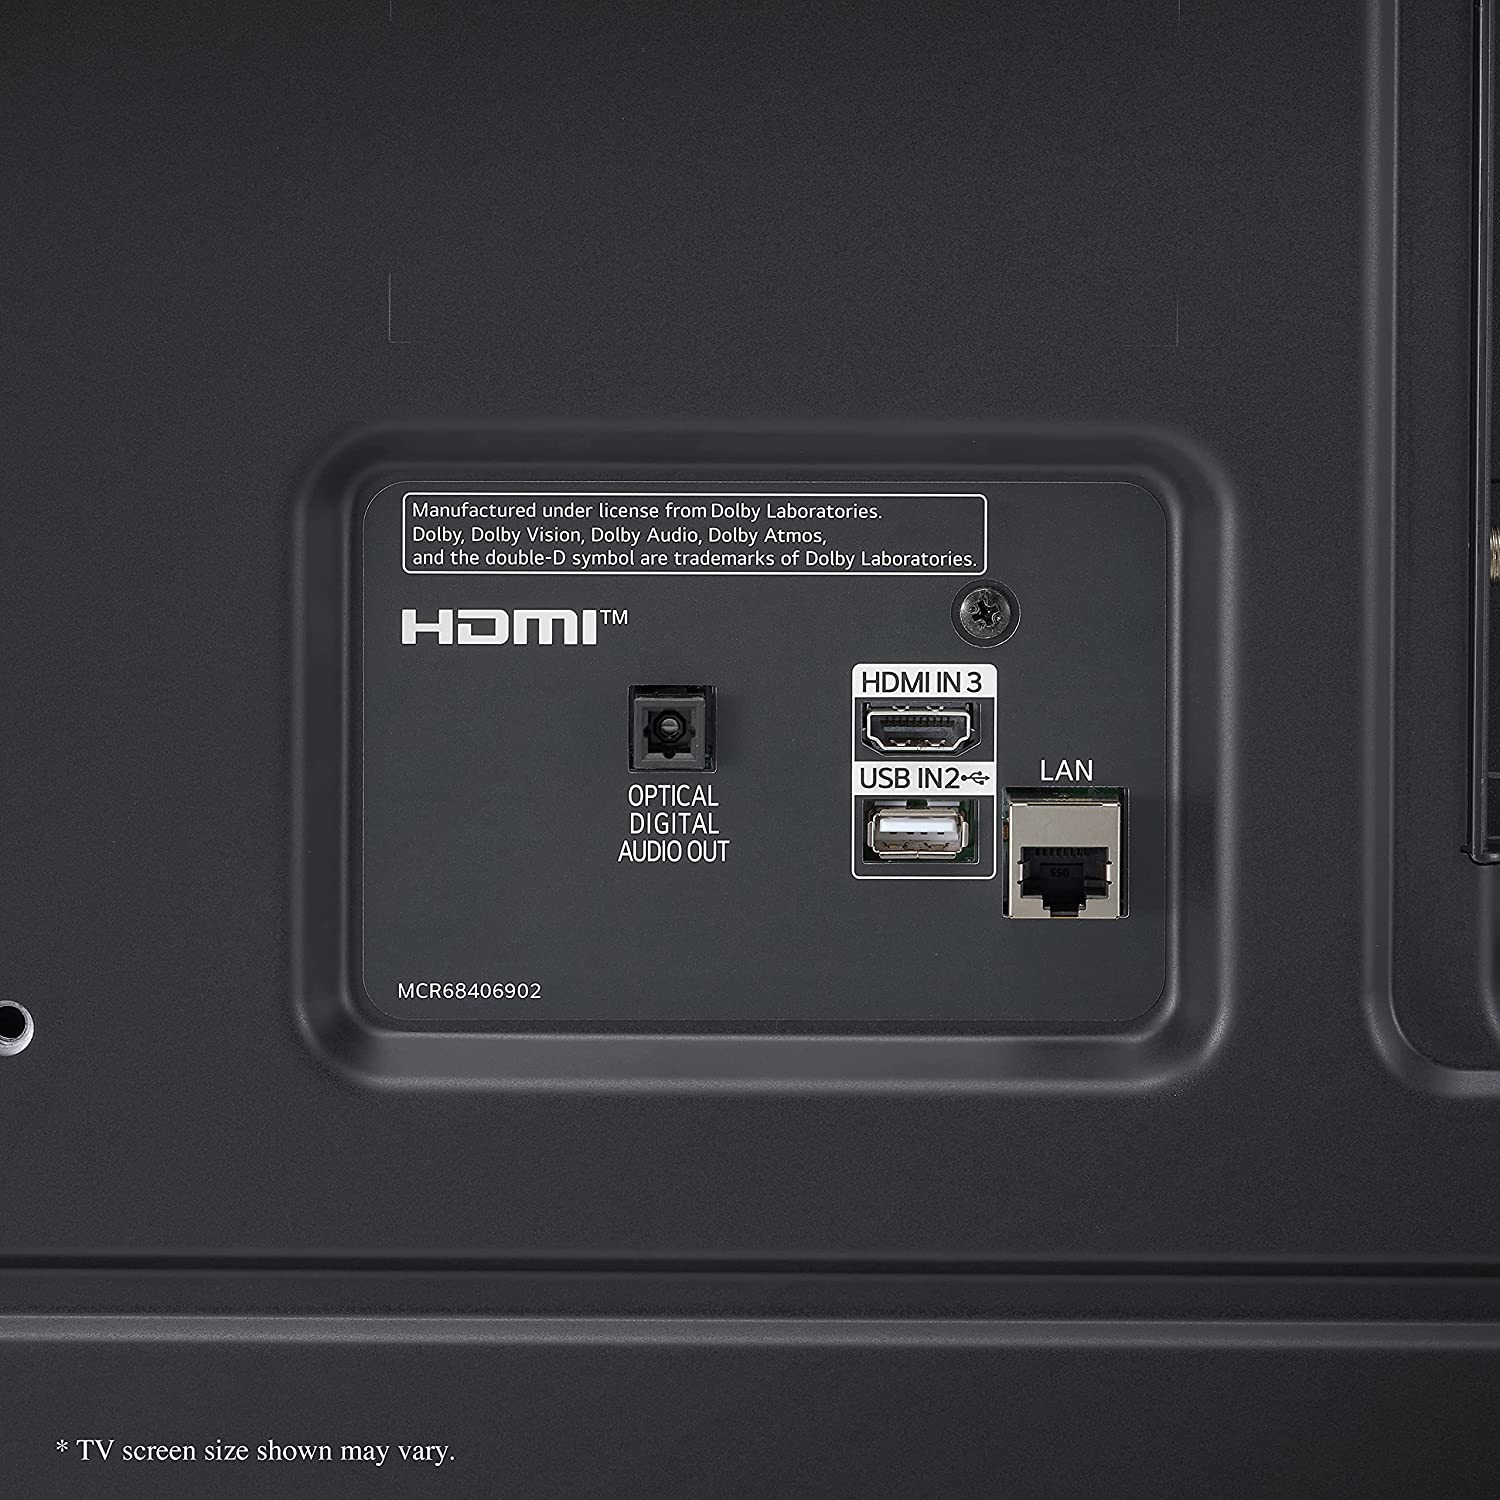 LG 50NANO75 50" 4K HDR Smart NanoCell LED TV